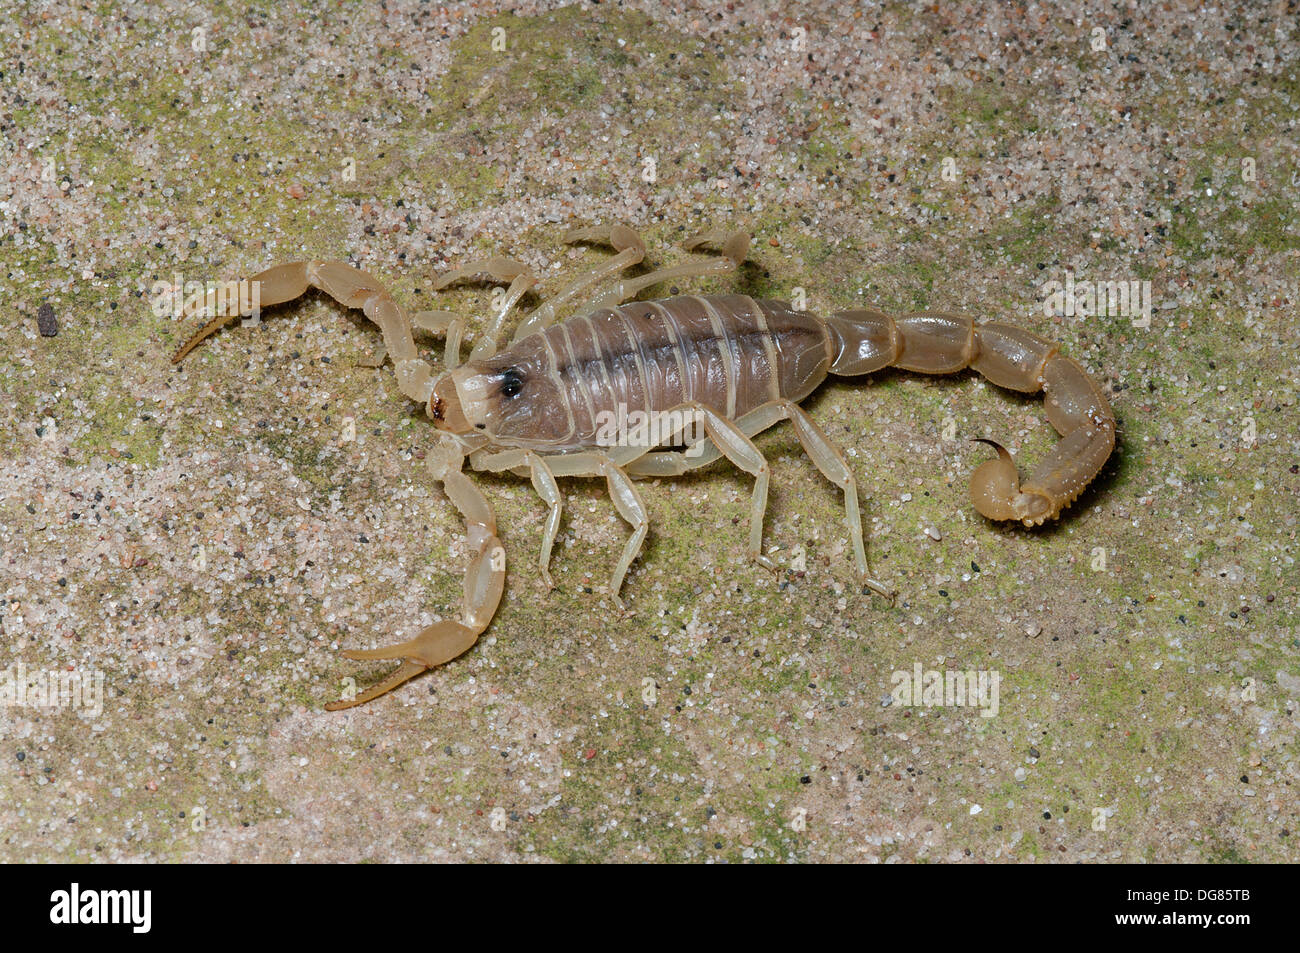 Egytian Sand Scorpion, Buthacus arenicola, scorpion, arachnid Stock Photo